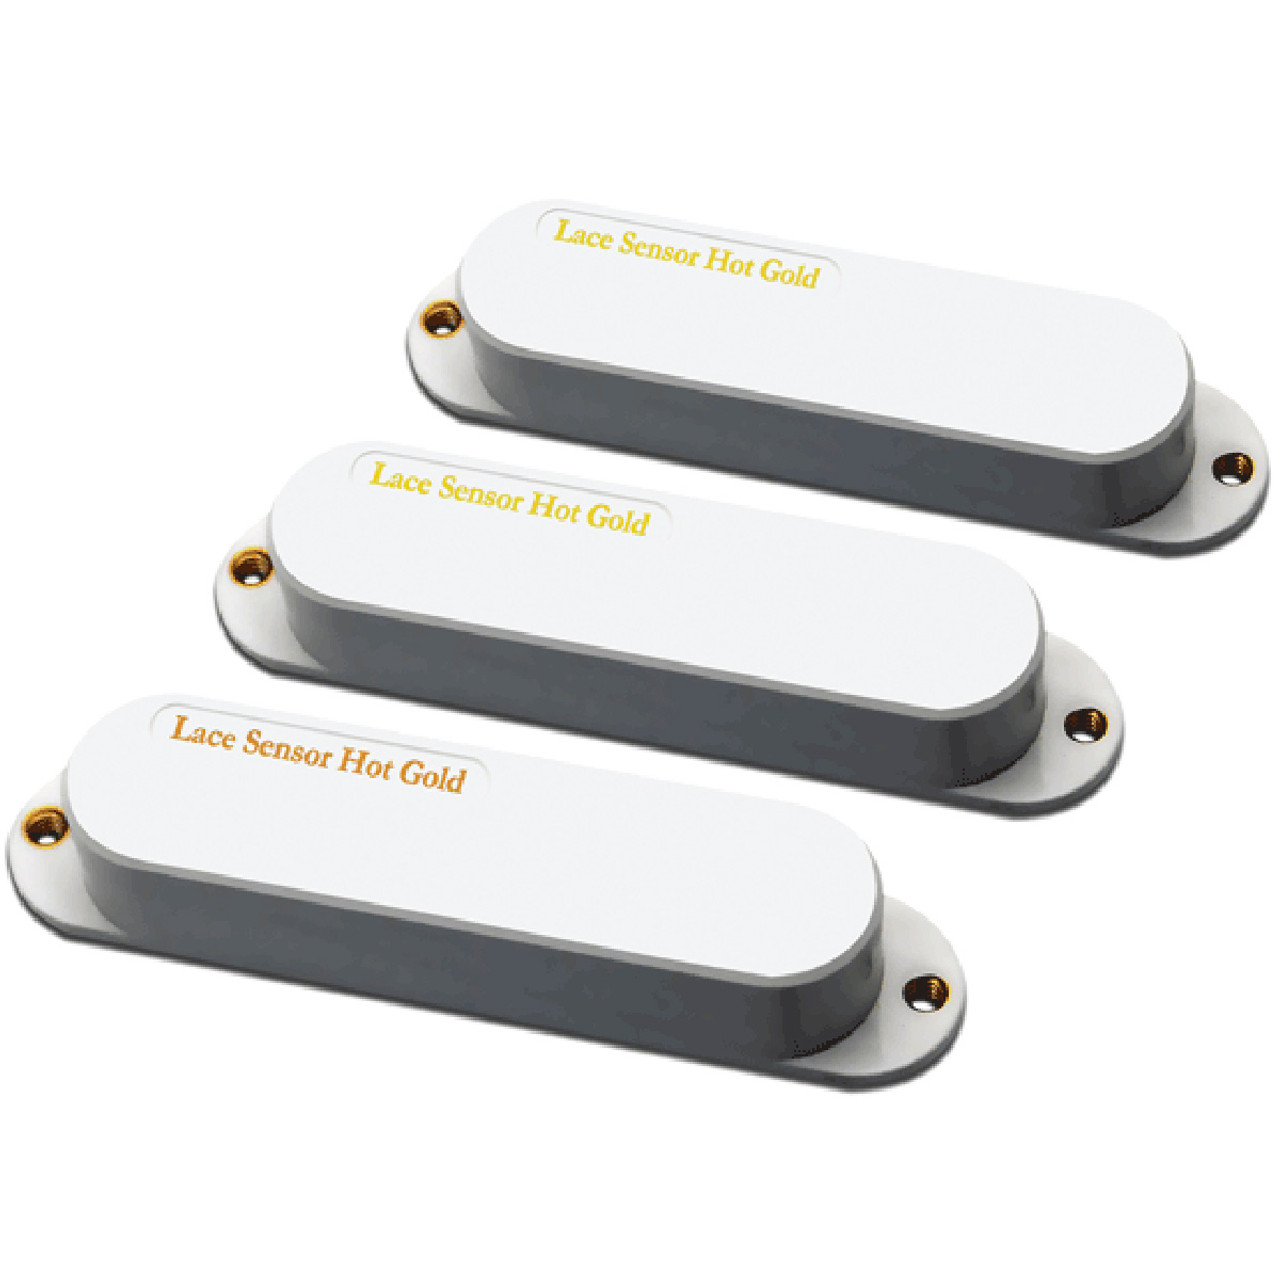 Lace Sensor Hot Gold set w/Hot 13.2K Bridge - white